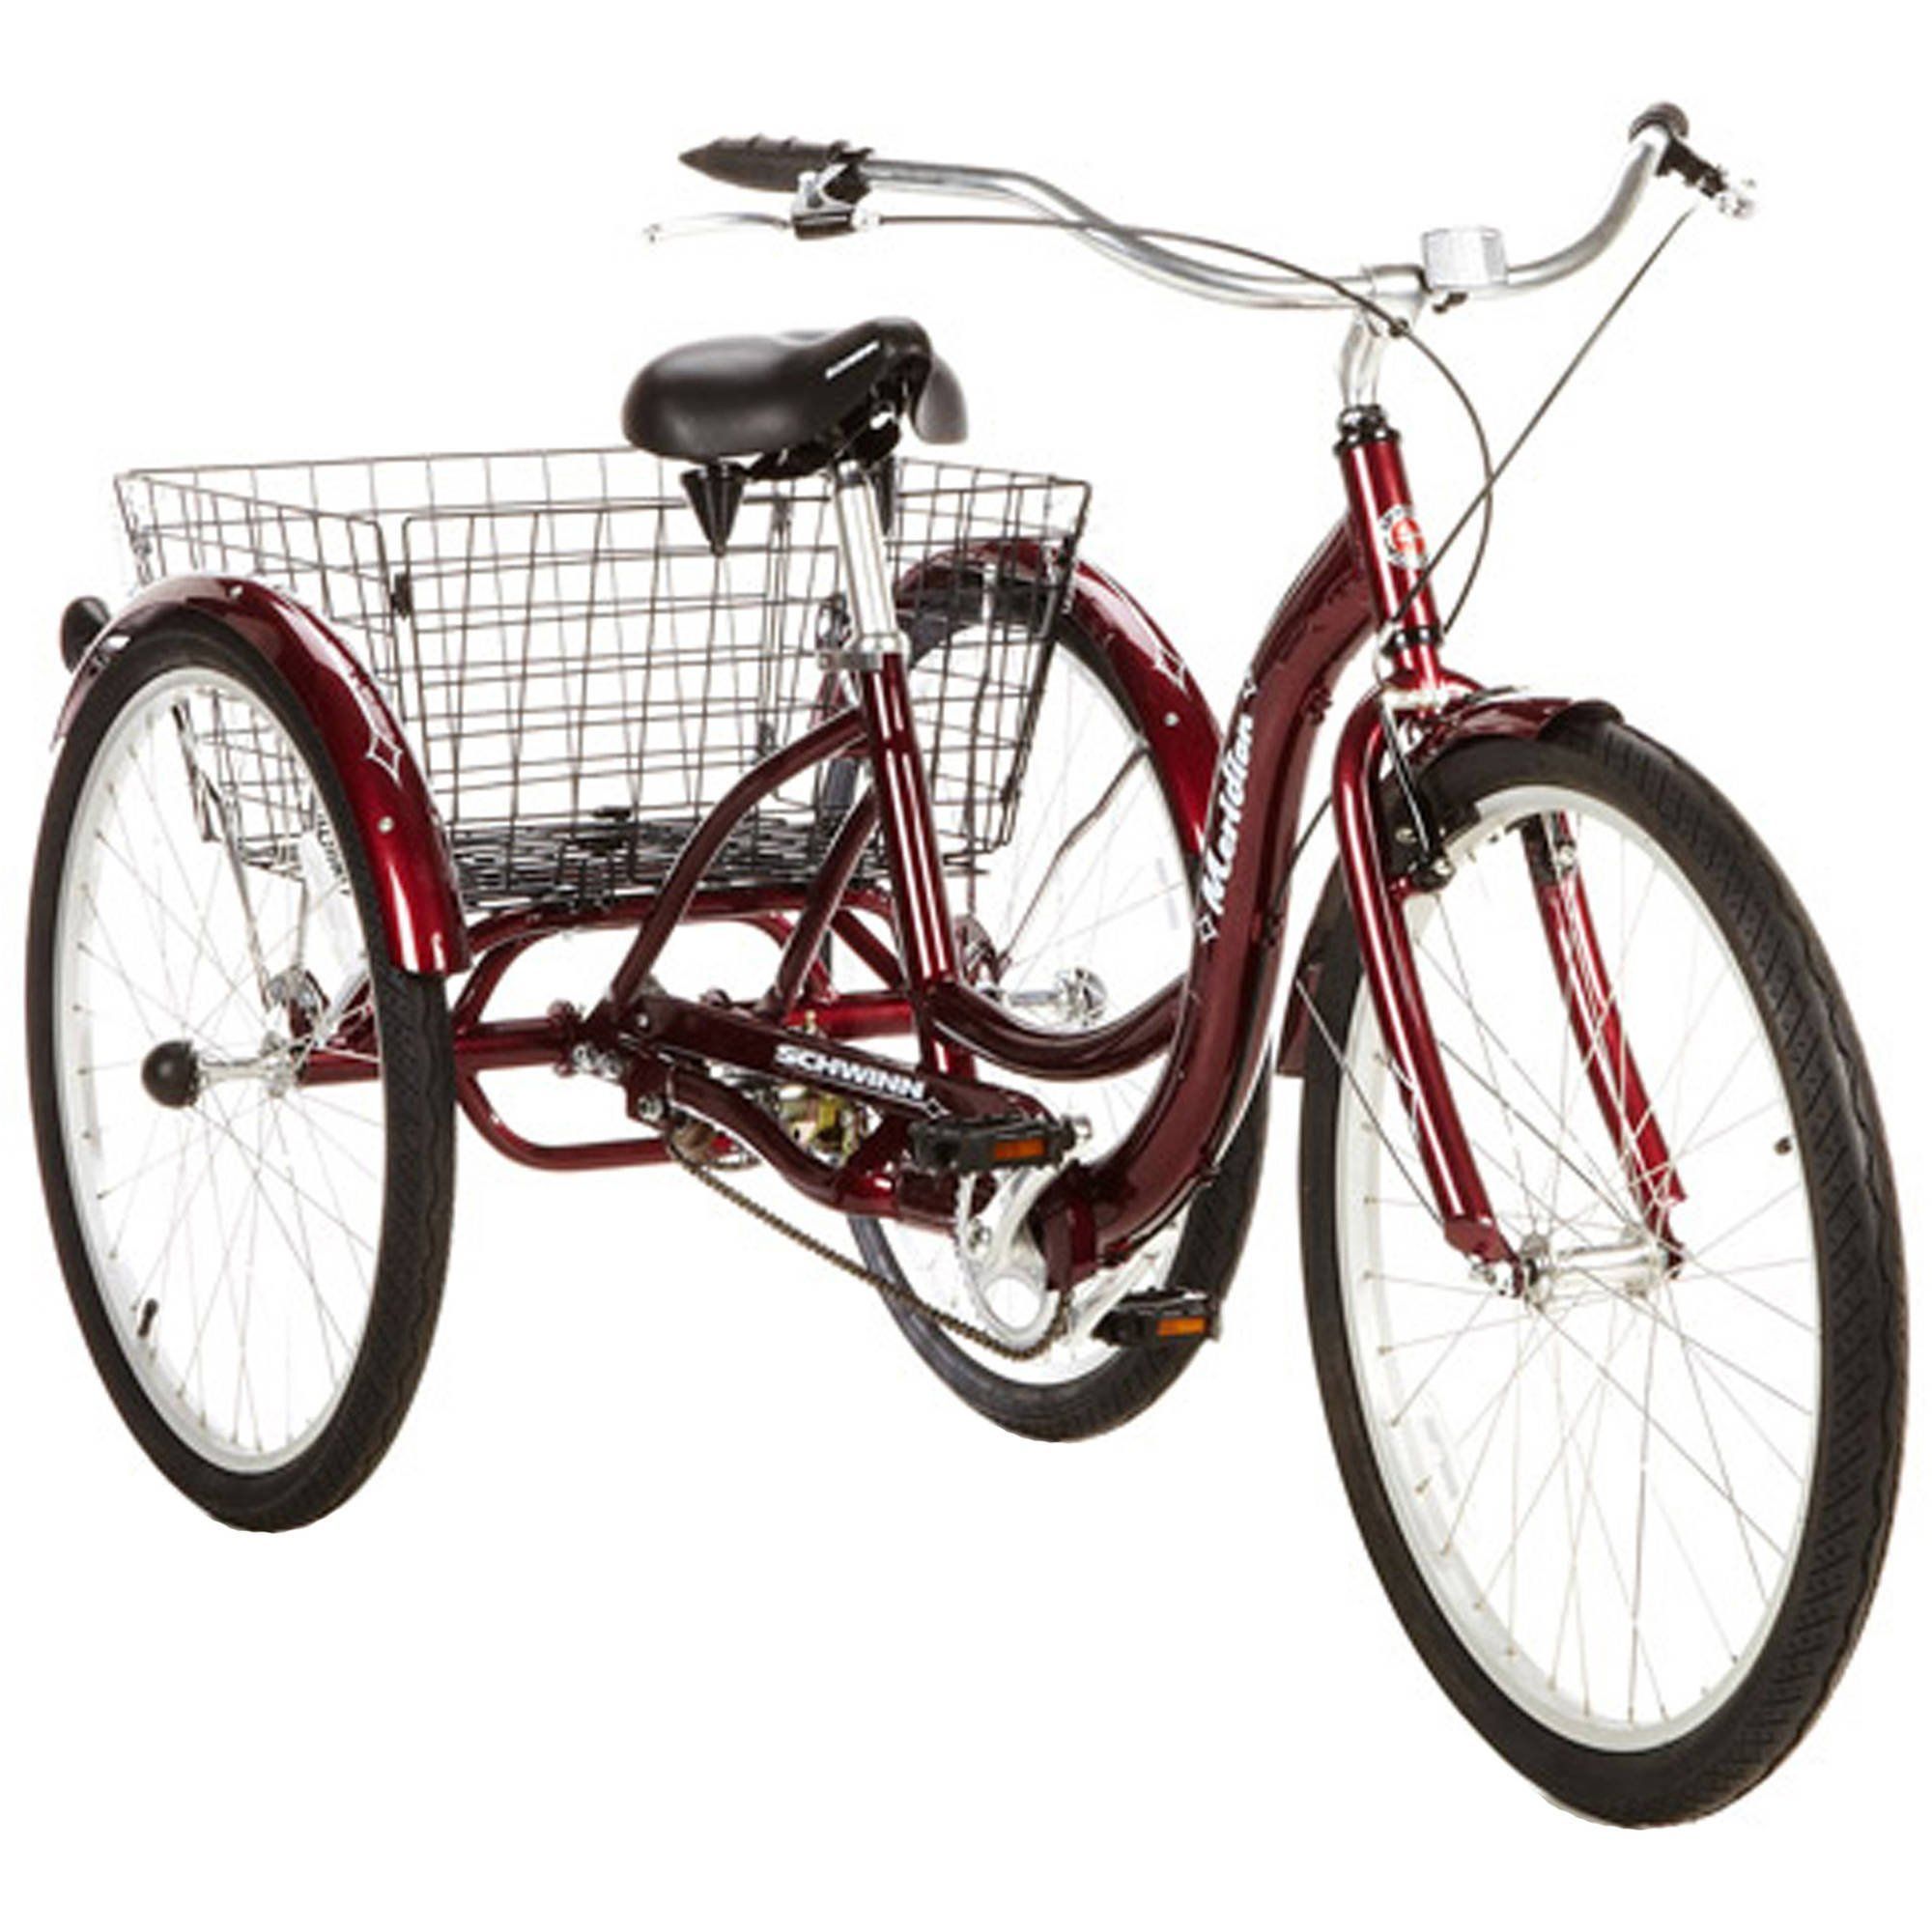 Adult tricycle three wheel bicycle